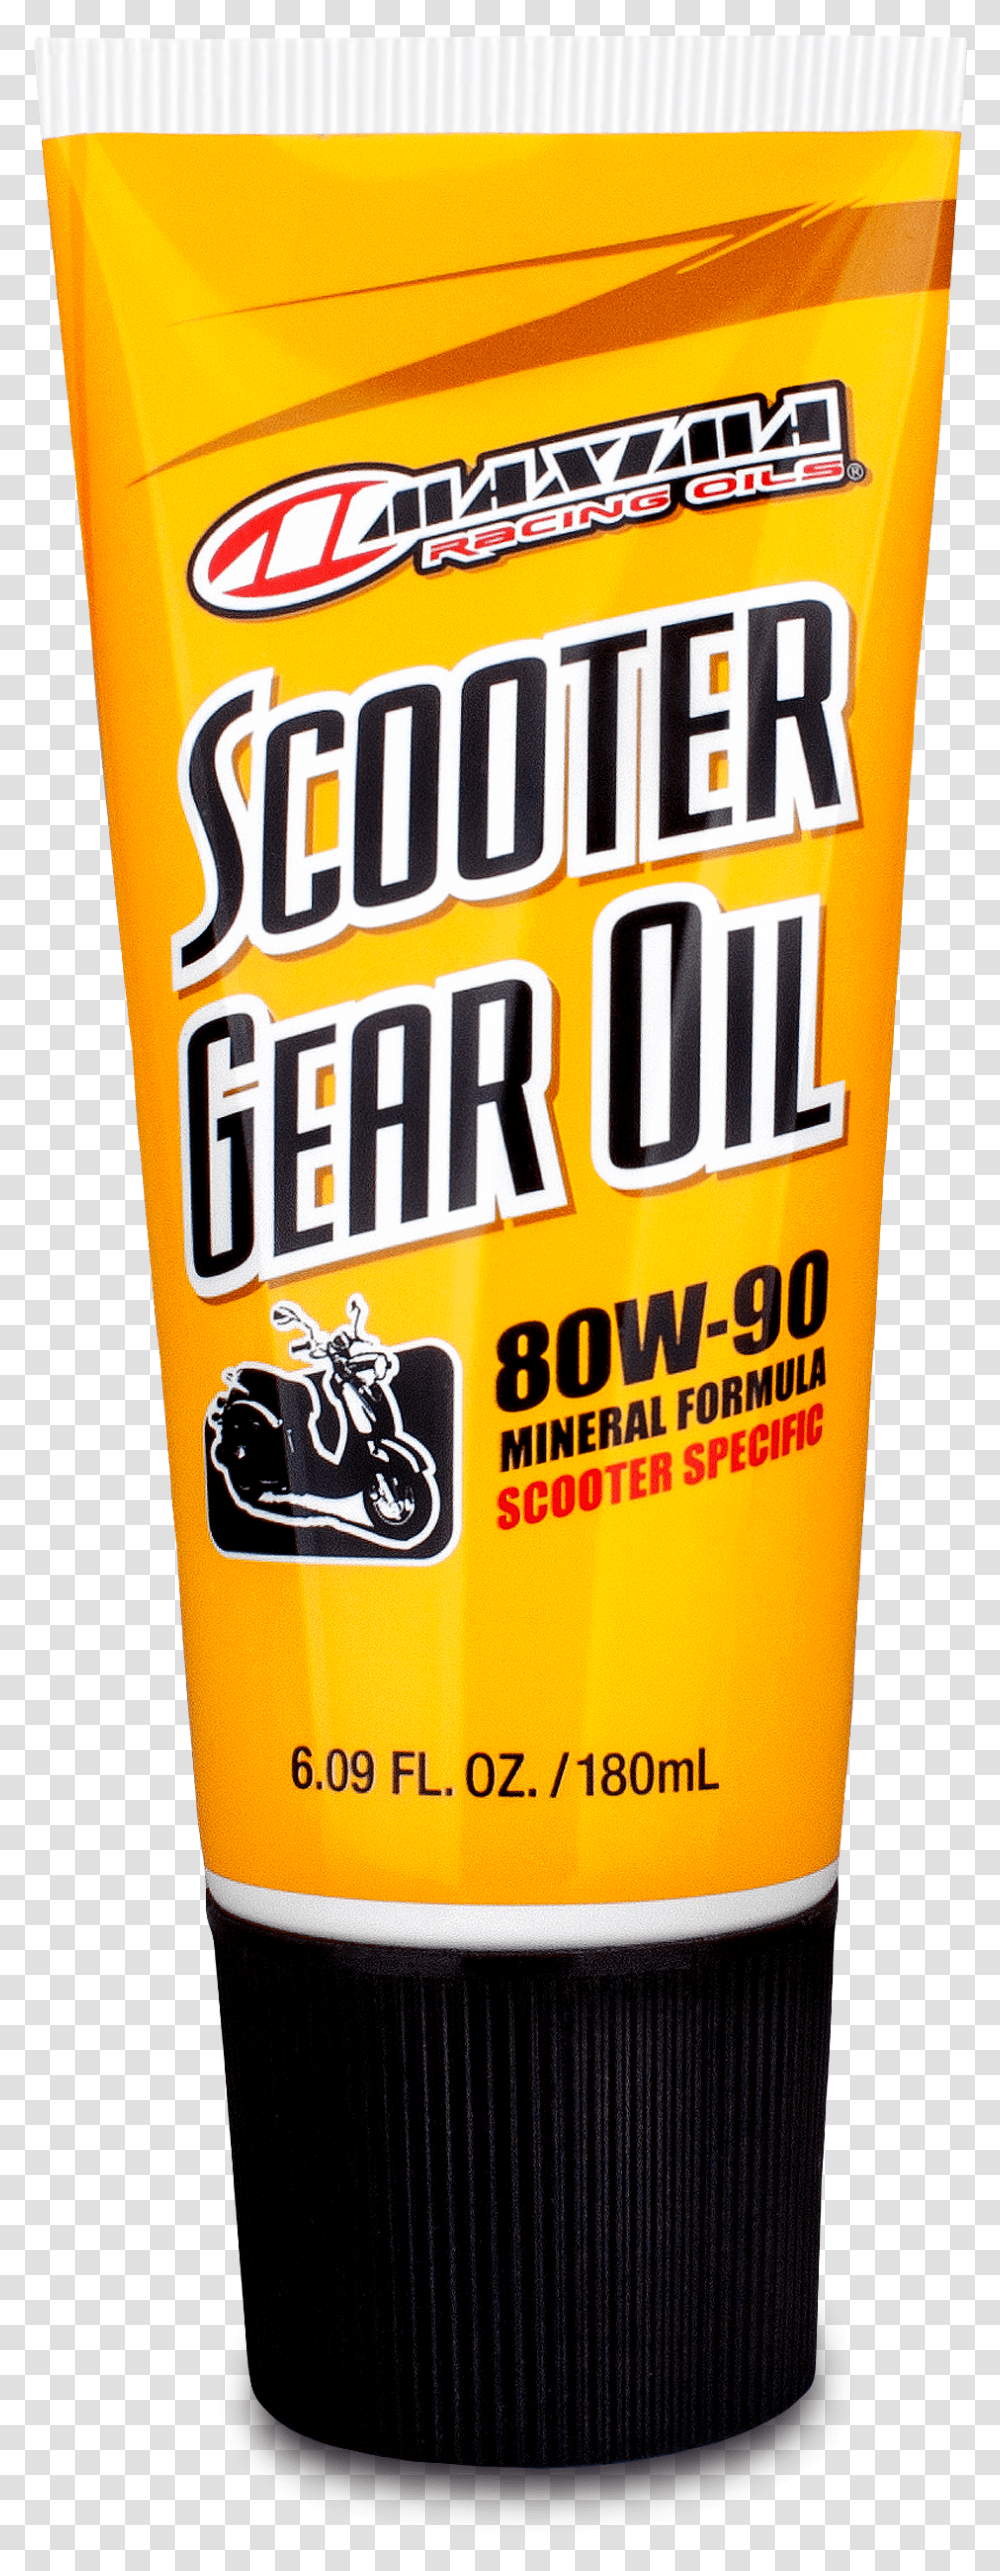 Scooter Gear Oil Cosmetics, Beer, Alcohol, Beverage, Bottle Transparent Png